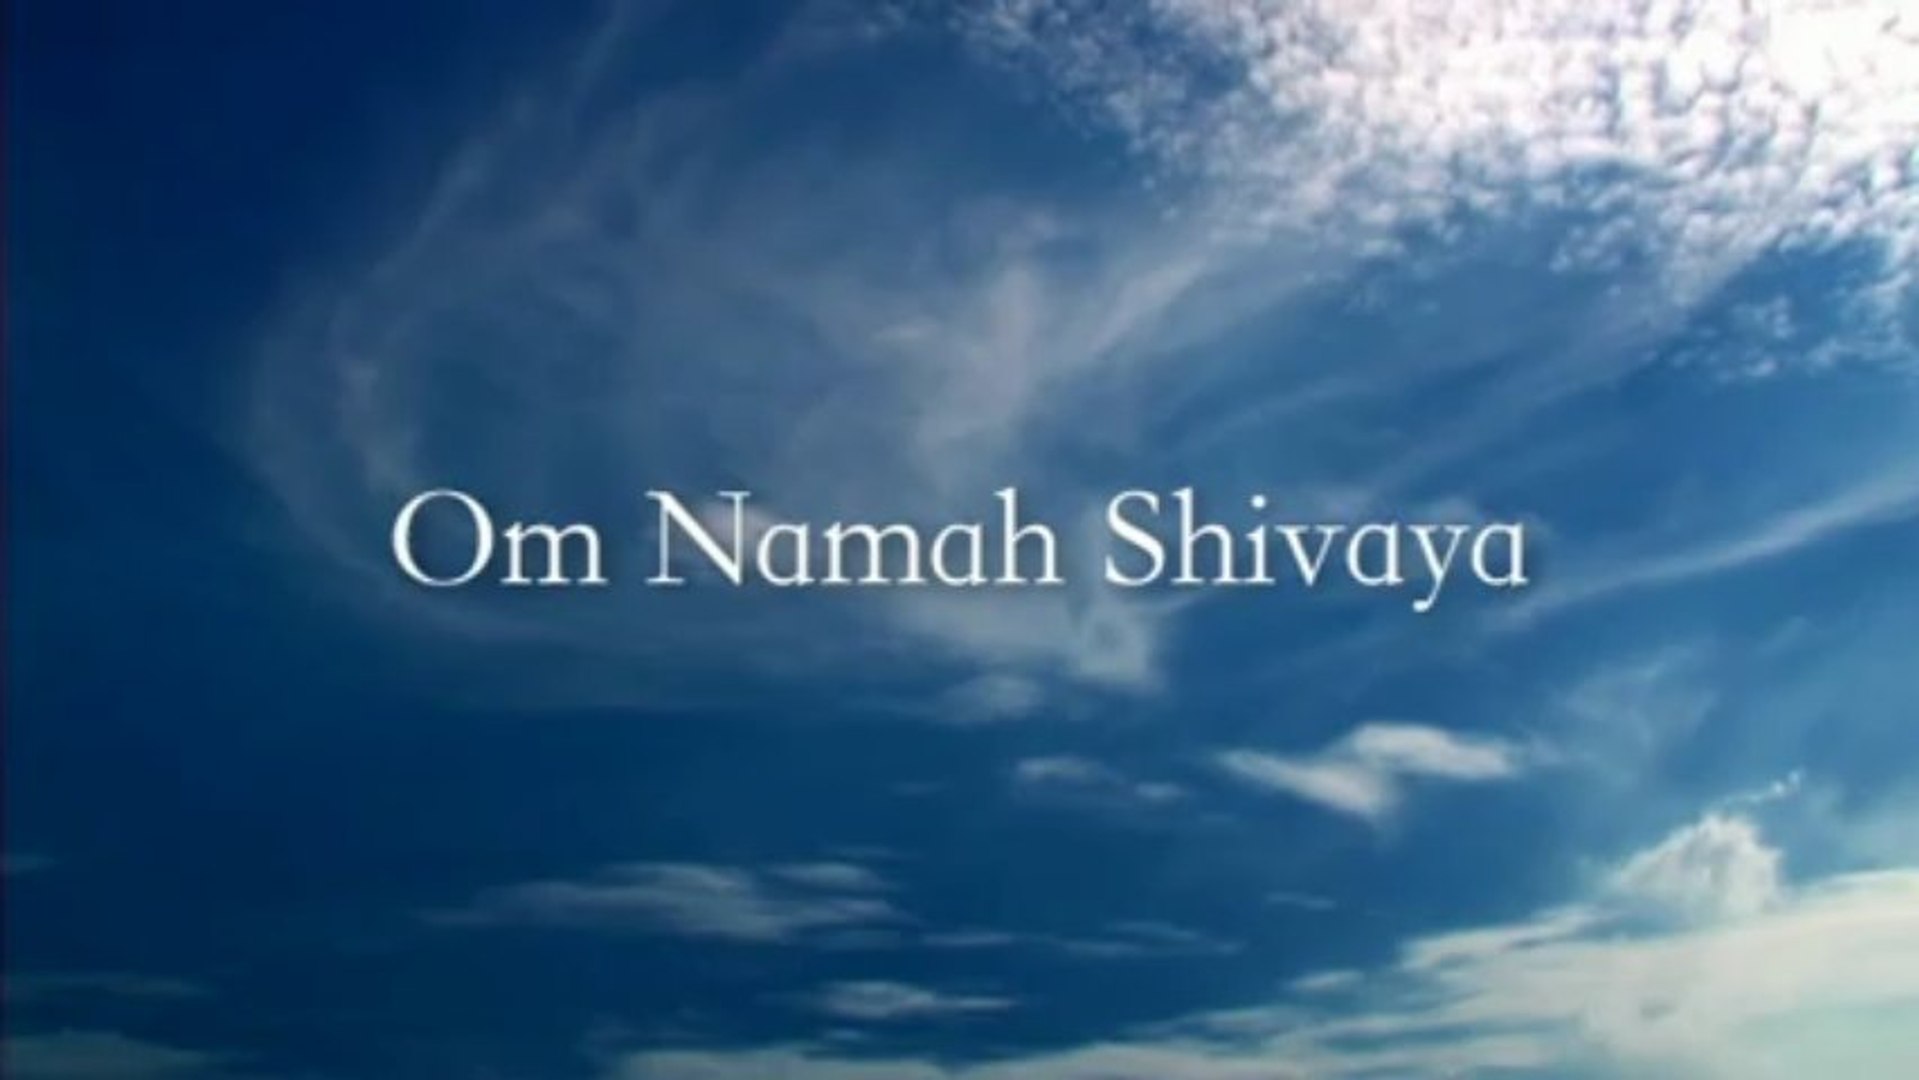 Peaceful Shiva Chants Shiva Chanting Om Namah Shivaya Chanting